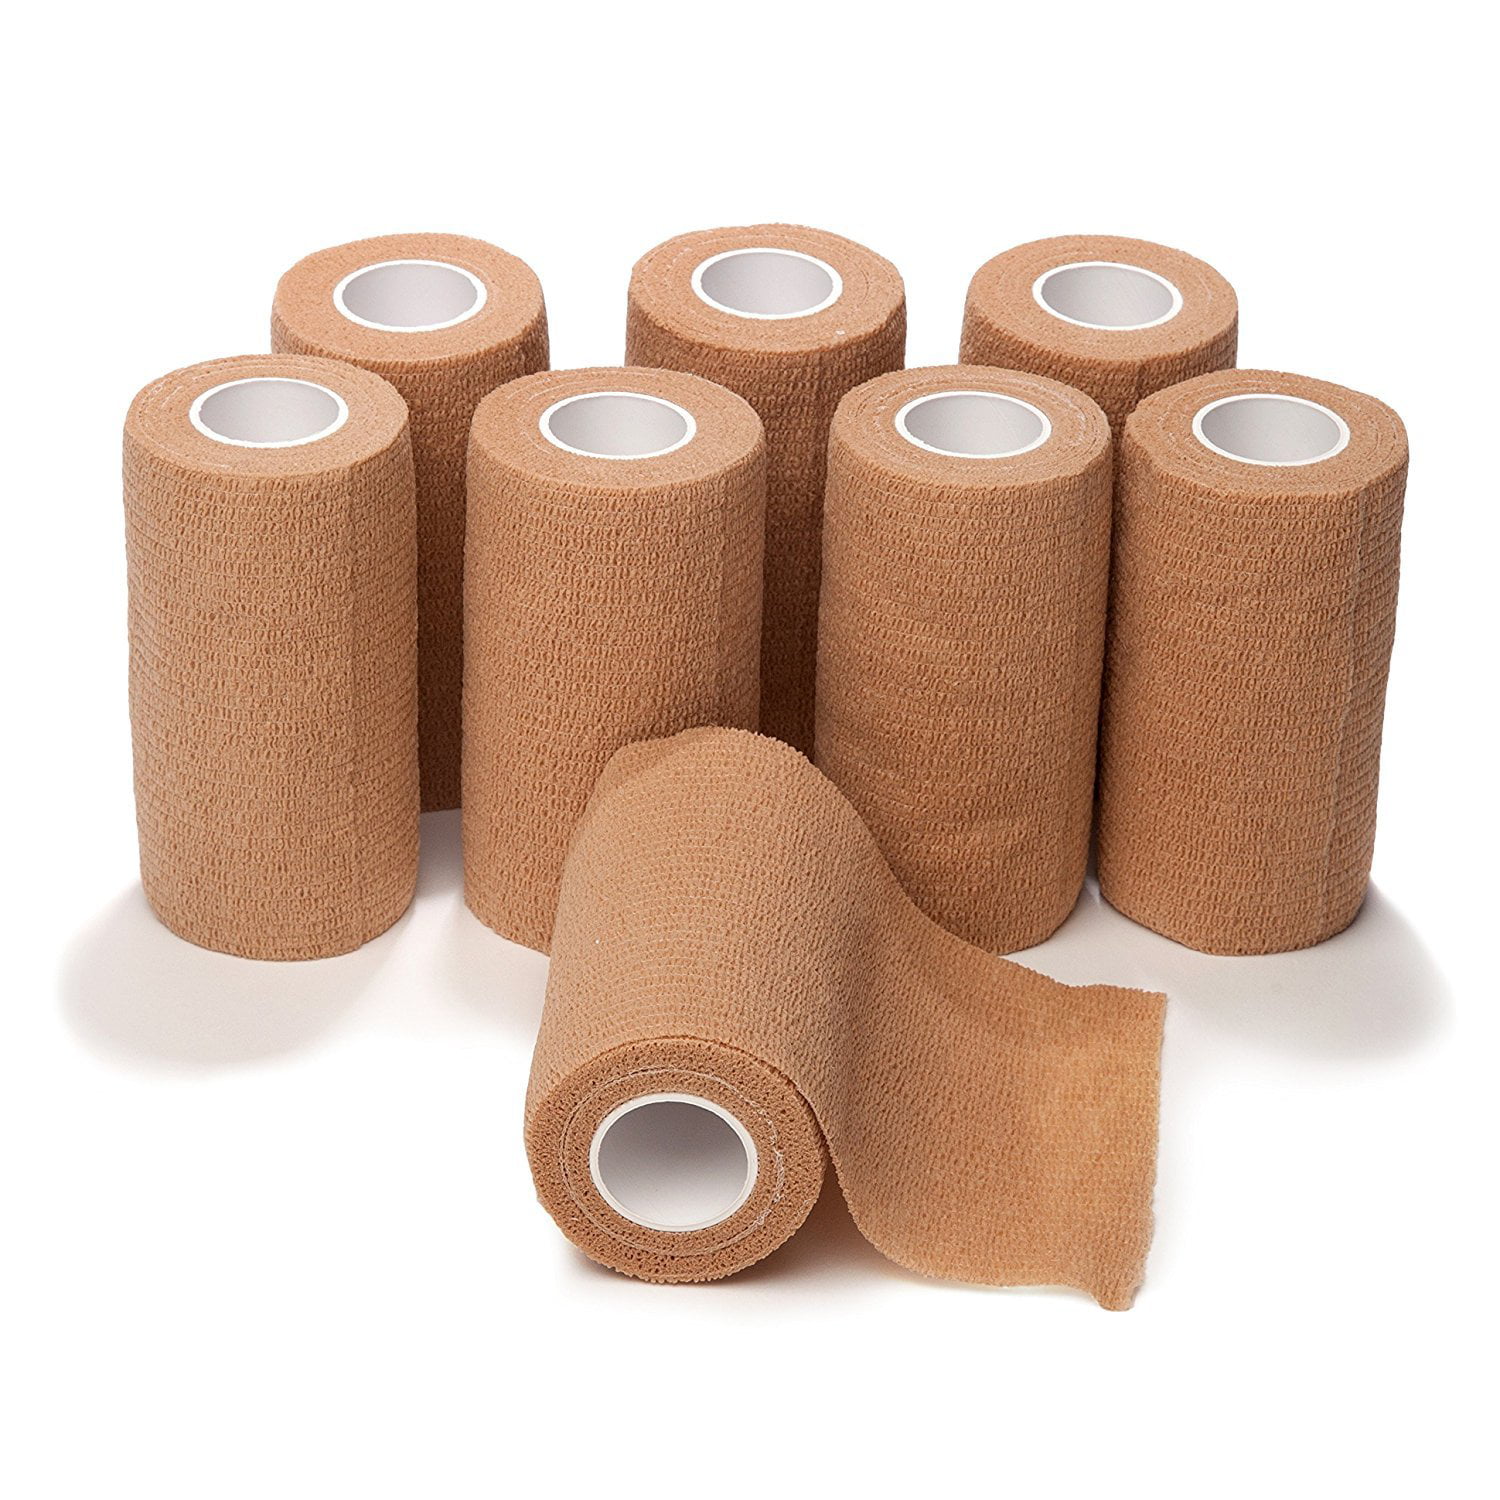 10 Rolls Self-Adherent Cohesive Tape Sports Tape Self-Adhesive Bandage Rolls